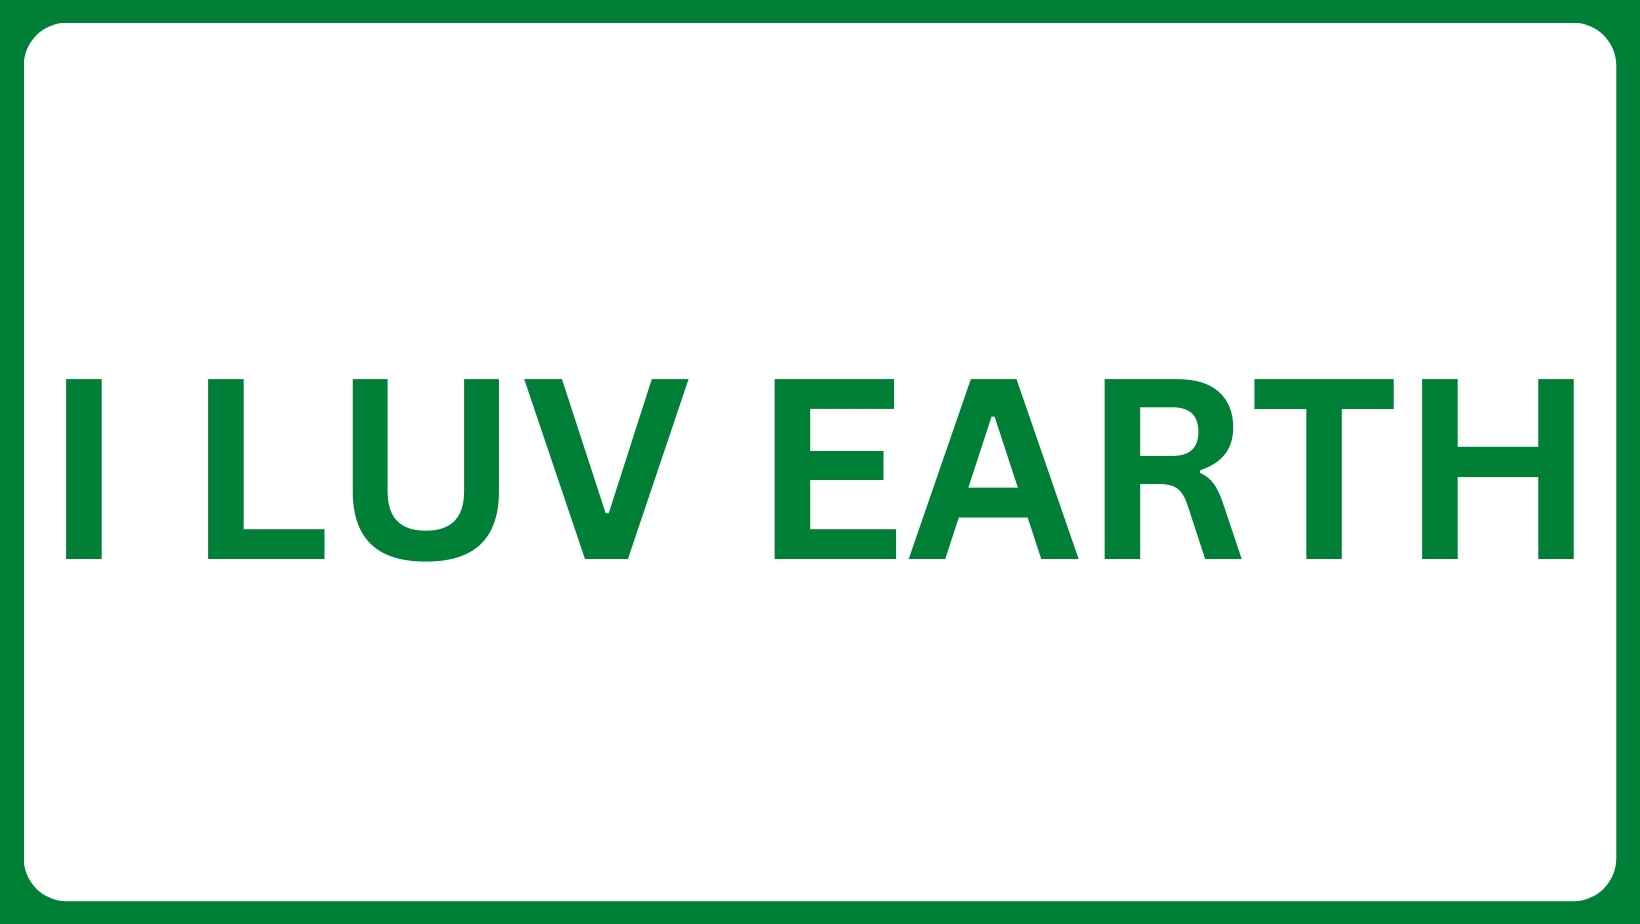 I Luv Earth Inc logo 